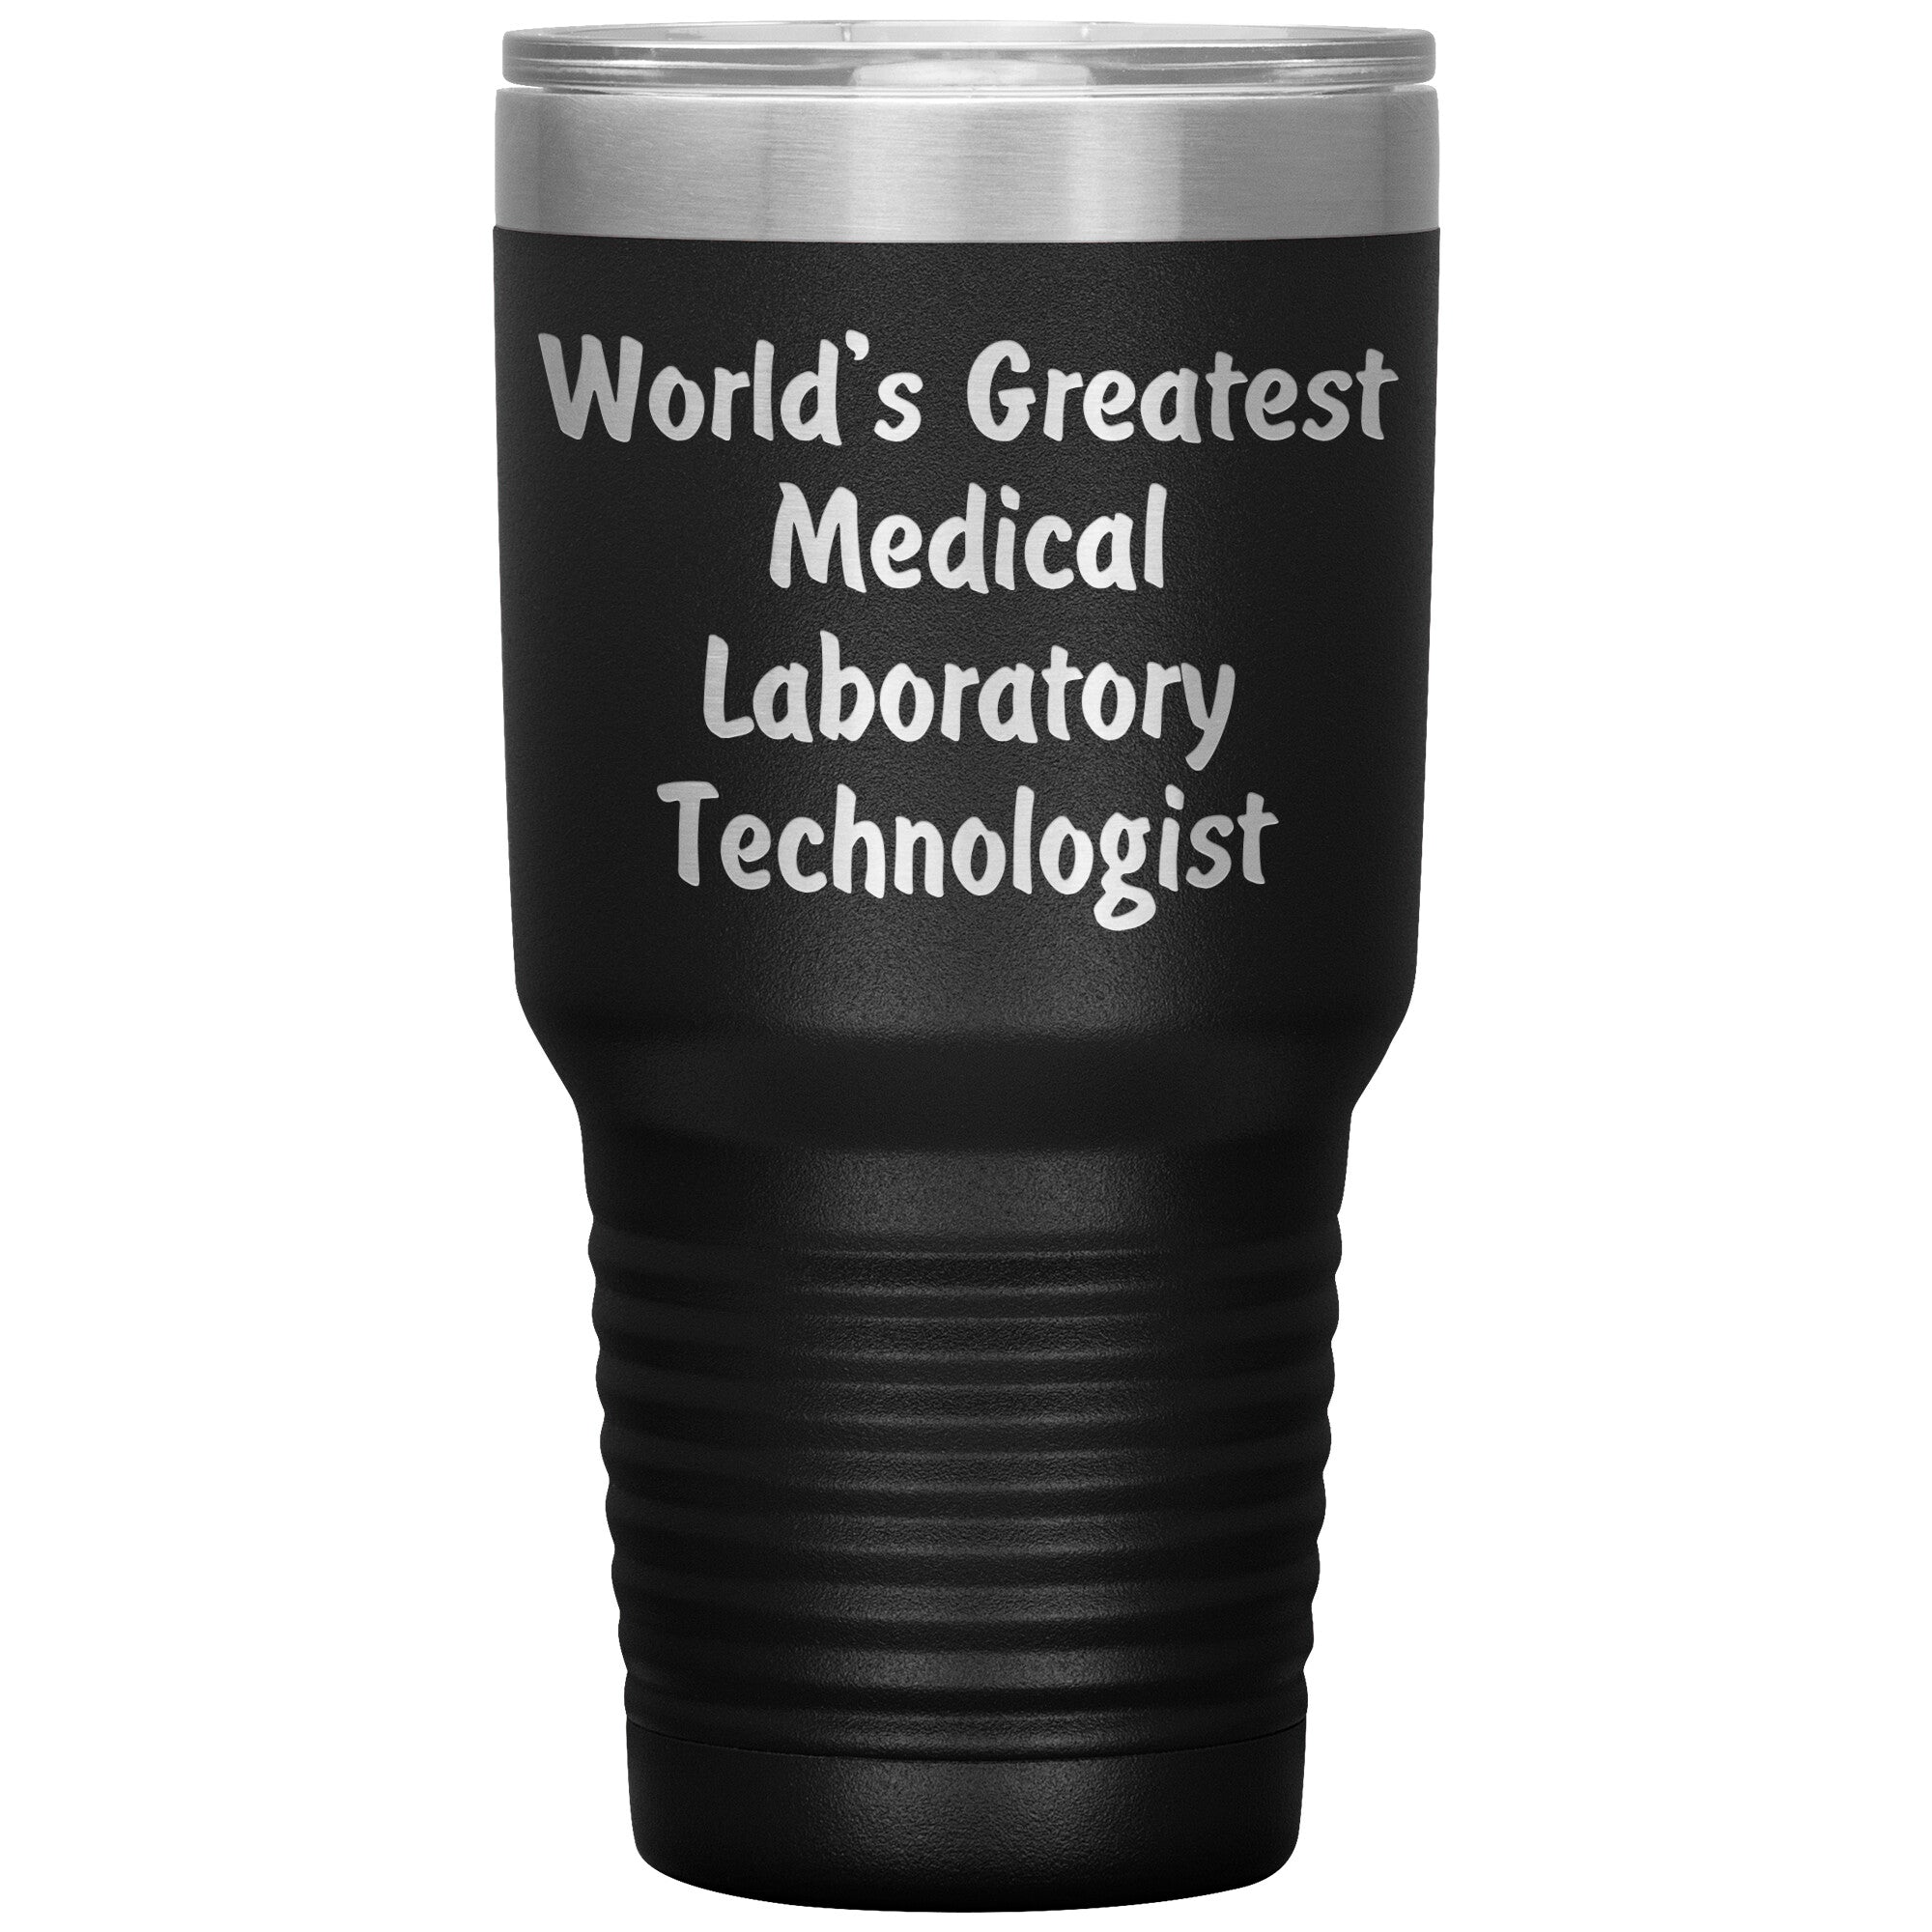 World's Greatest Medical Laboratory Technologist - 30oz Insulated Tumbler